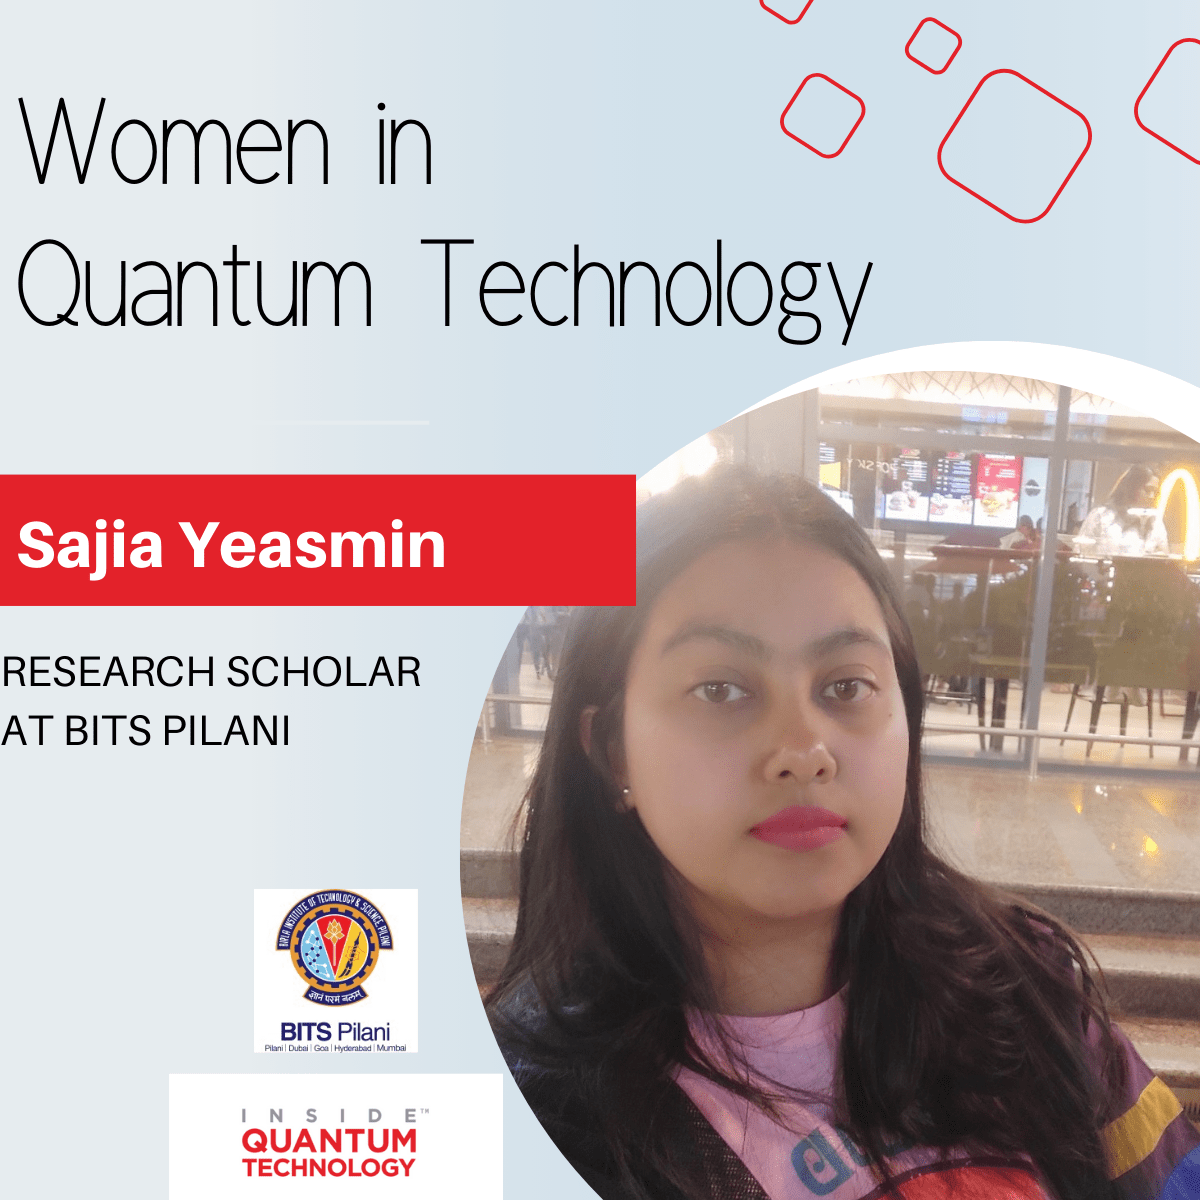 Frauen der Quantentechnologie: Sajia Yeasmin von BITS Pilani – Inside Quantum Technology